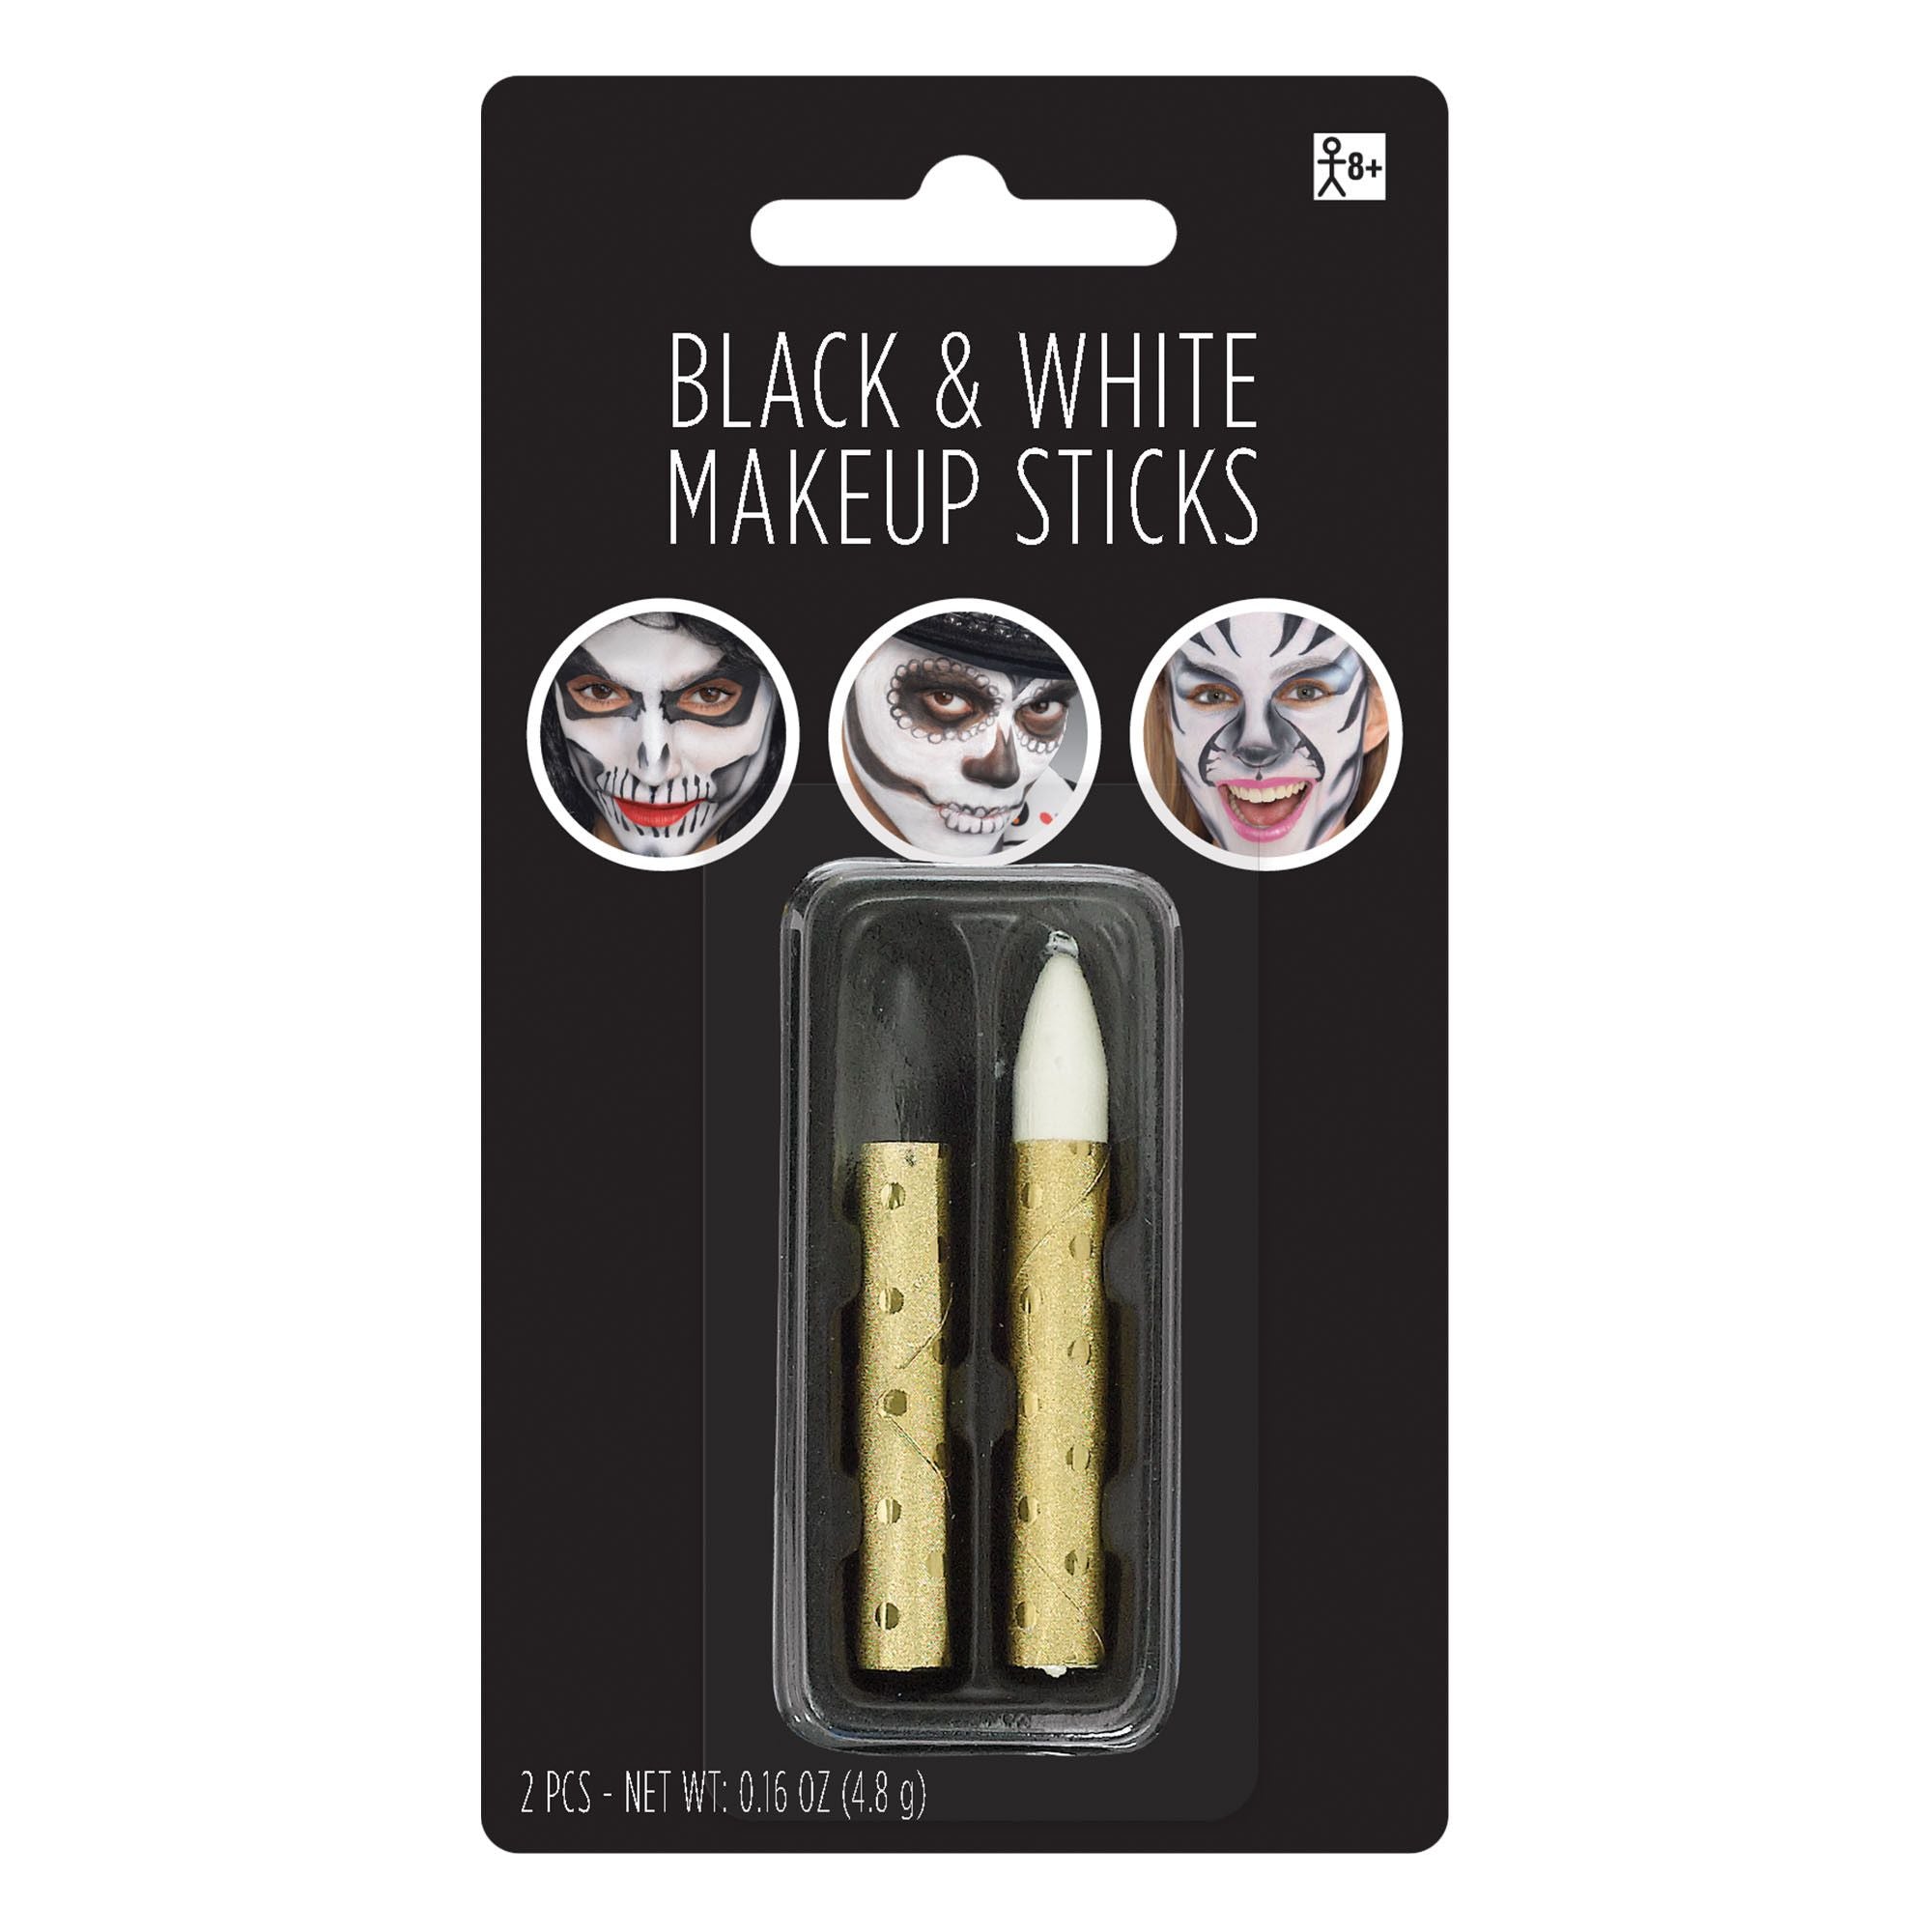 Amscan COSTUMES: MAKE-UP Black and White Makeup Sticks